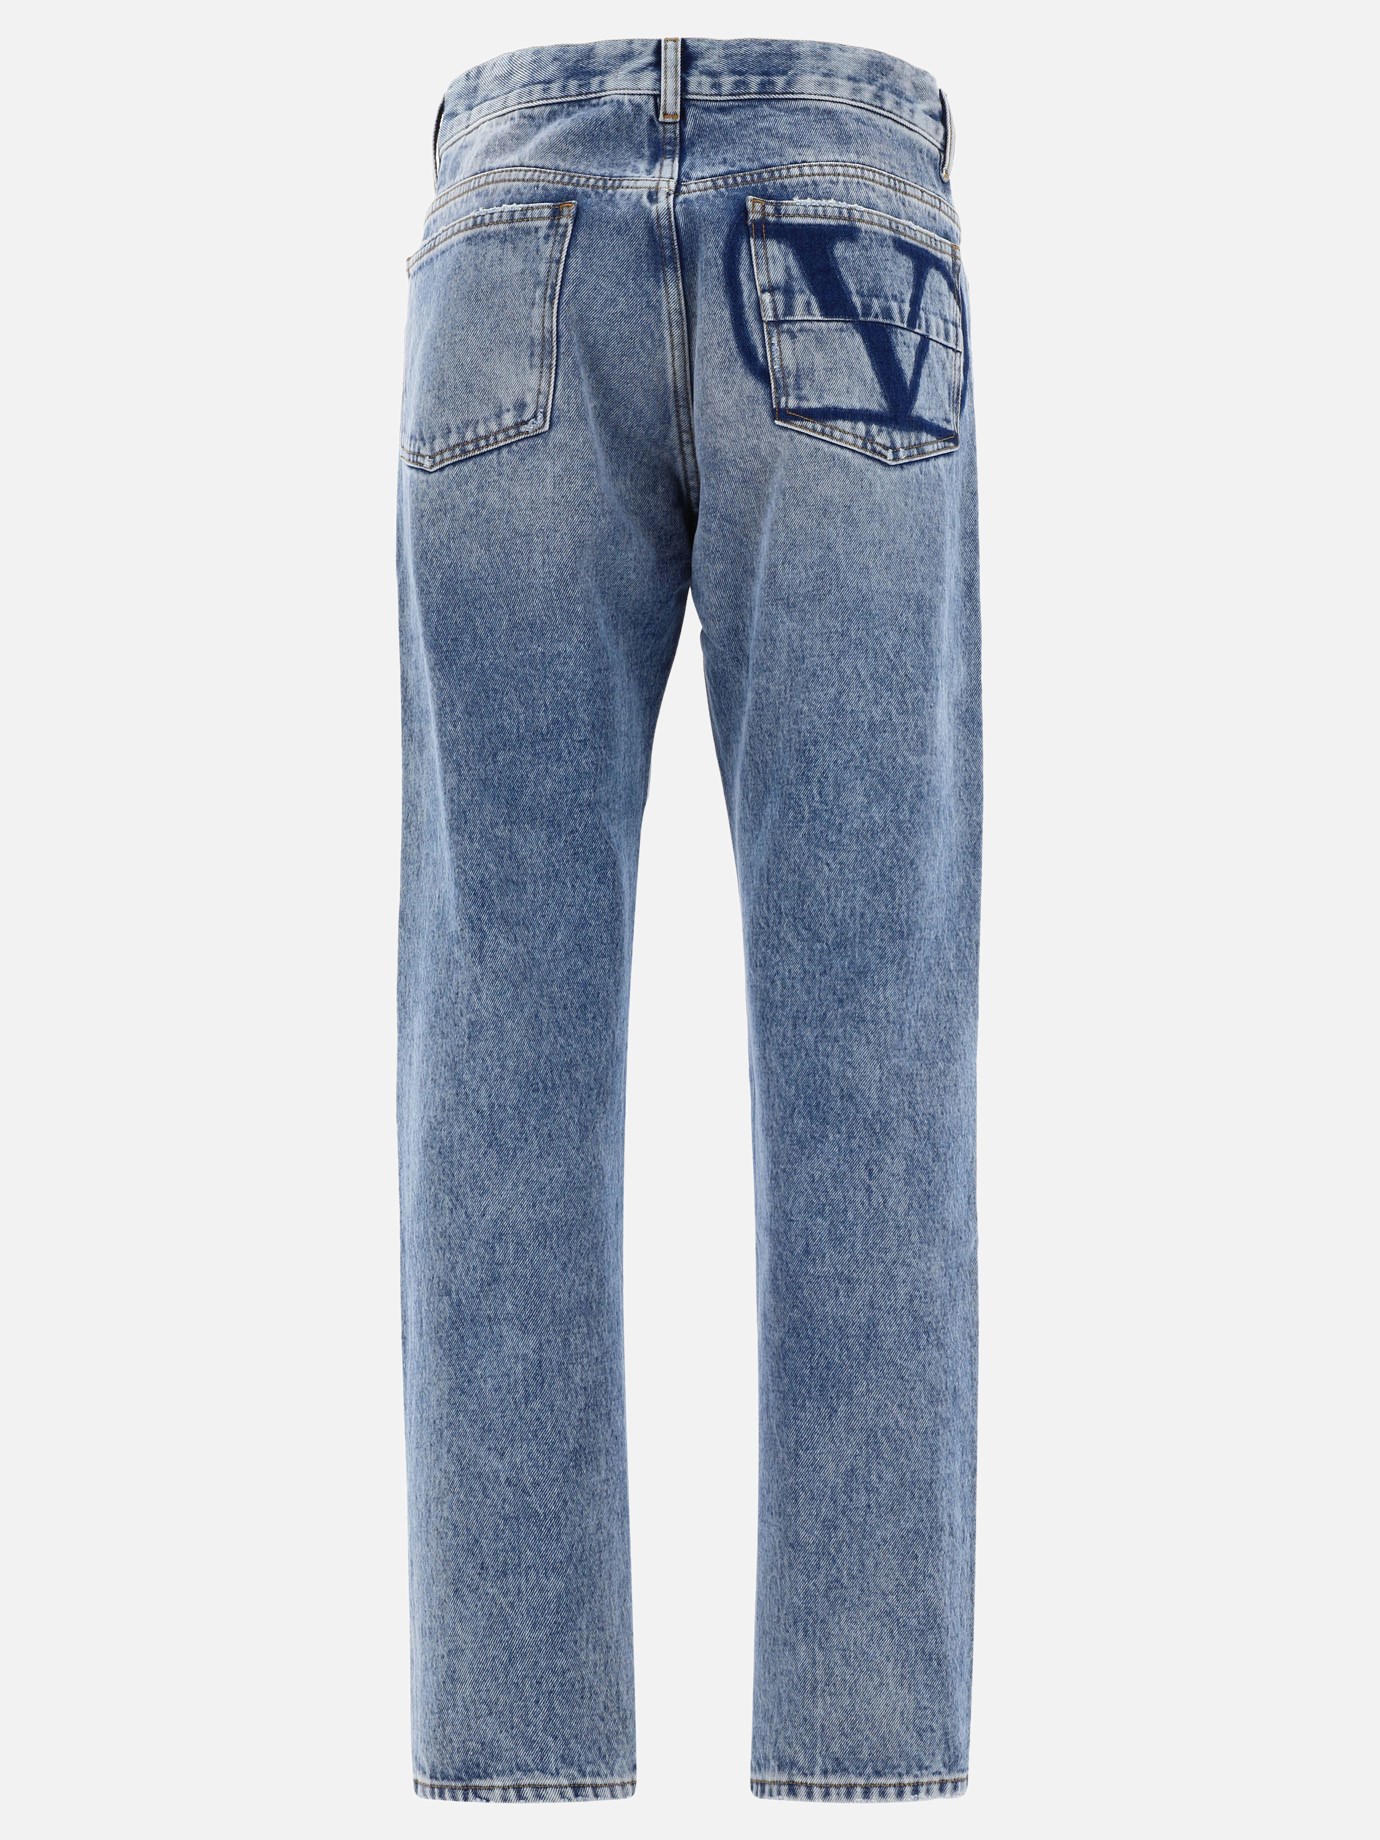  VLogo  jeans by Valentino